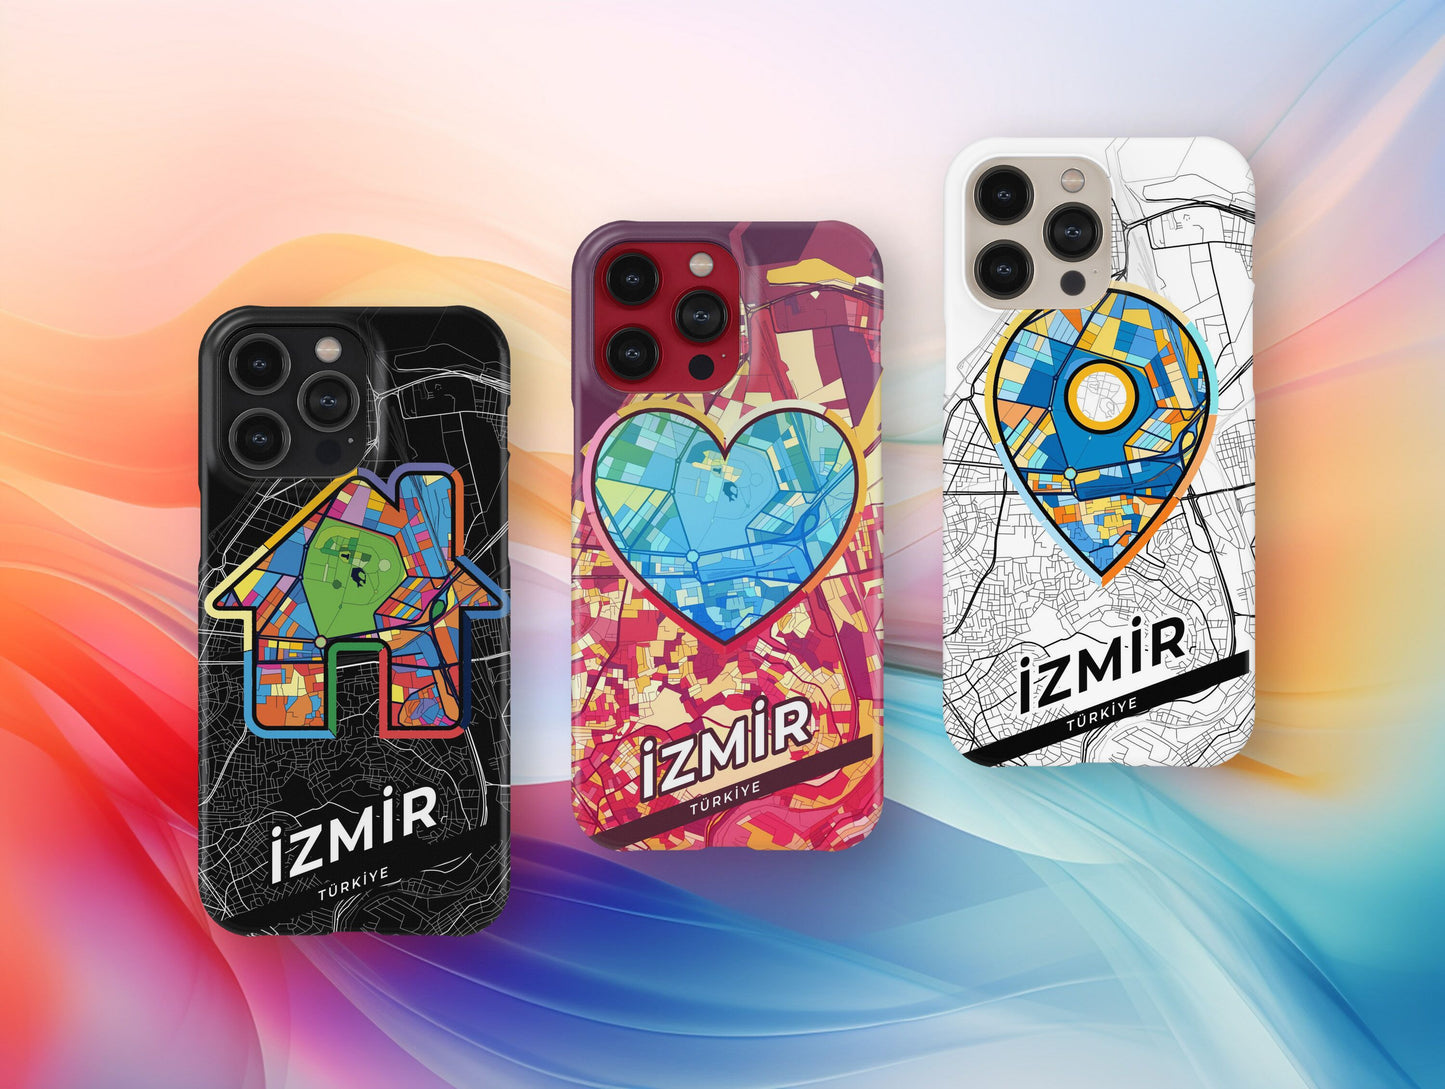 İzmir Turkey slim phone case with colorful icon. Birthday, wedding or housewarming gift. Couple match cases.